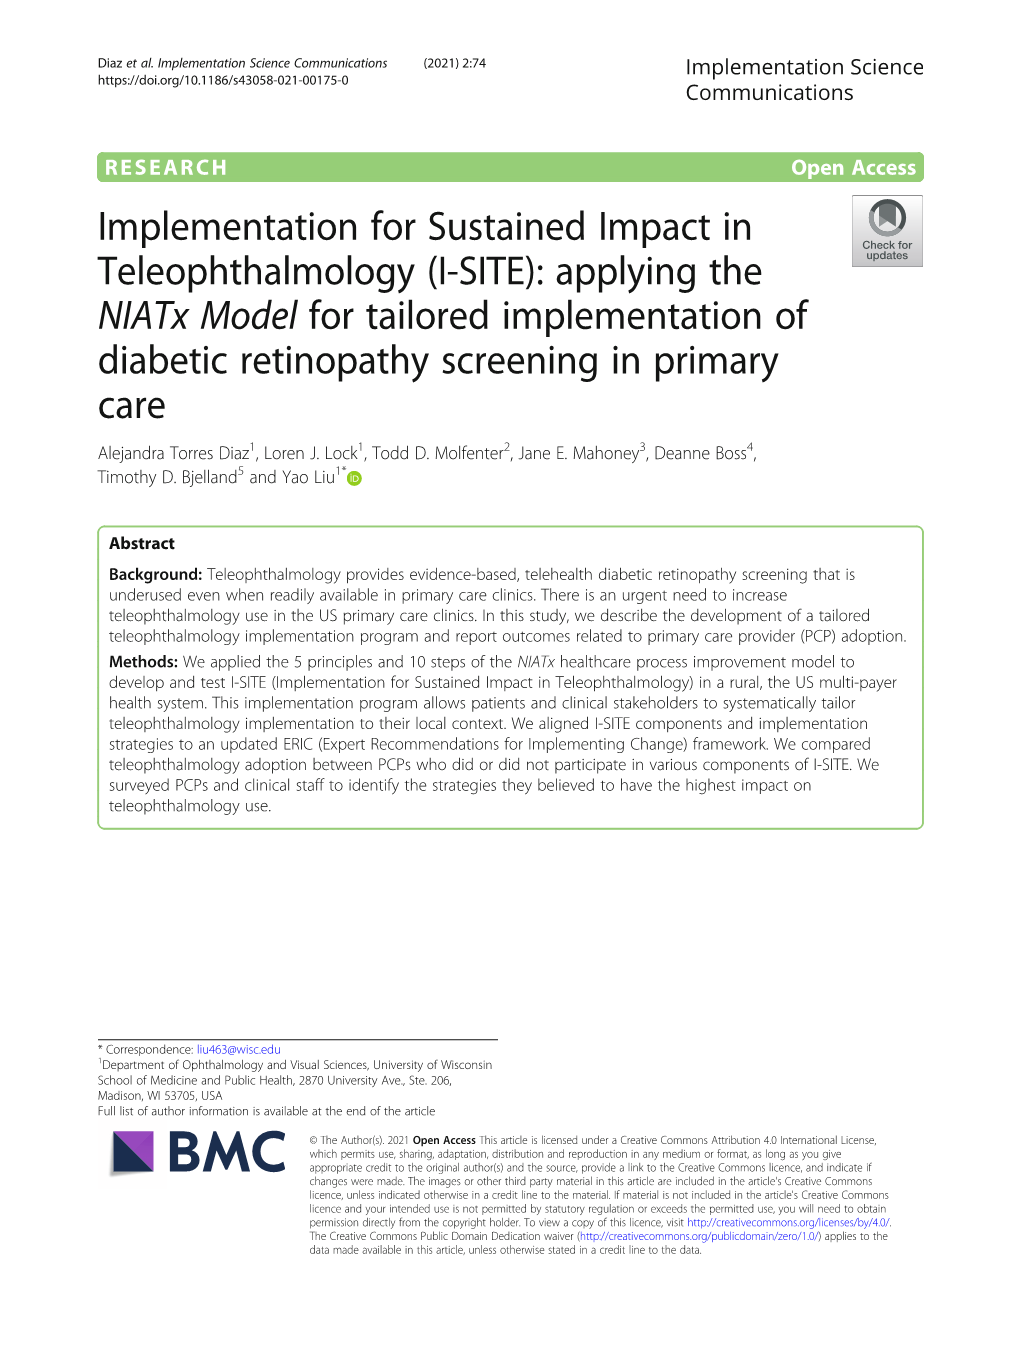 Applying the Niatx Model for Tailored Implementation of Diabetic Retinopathy Screening in Primary Care Alejandra Torres Diaz1, Loren J